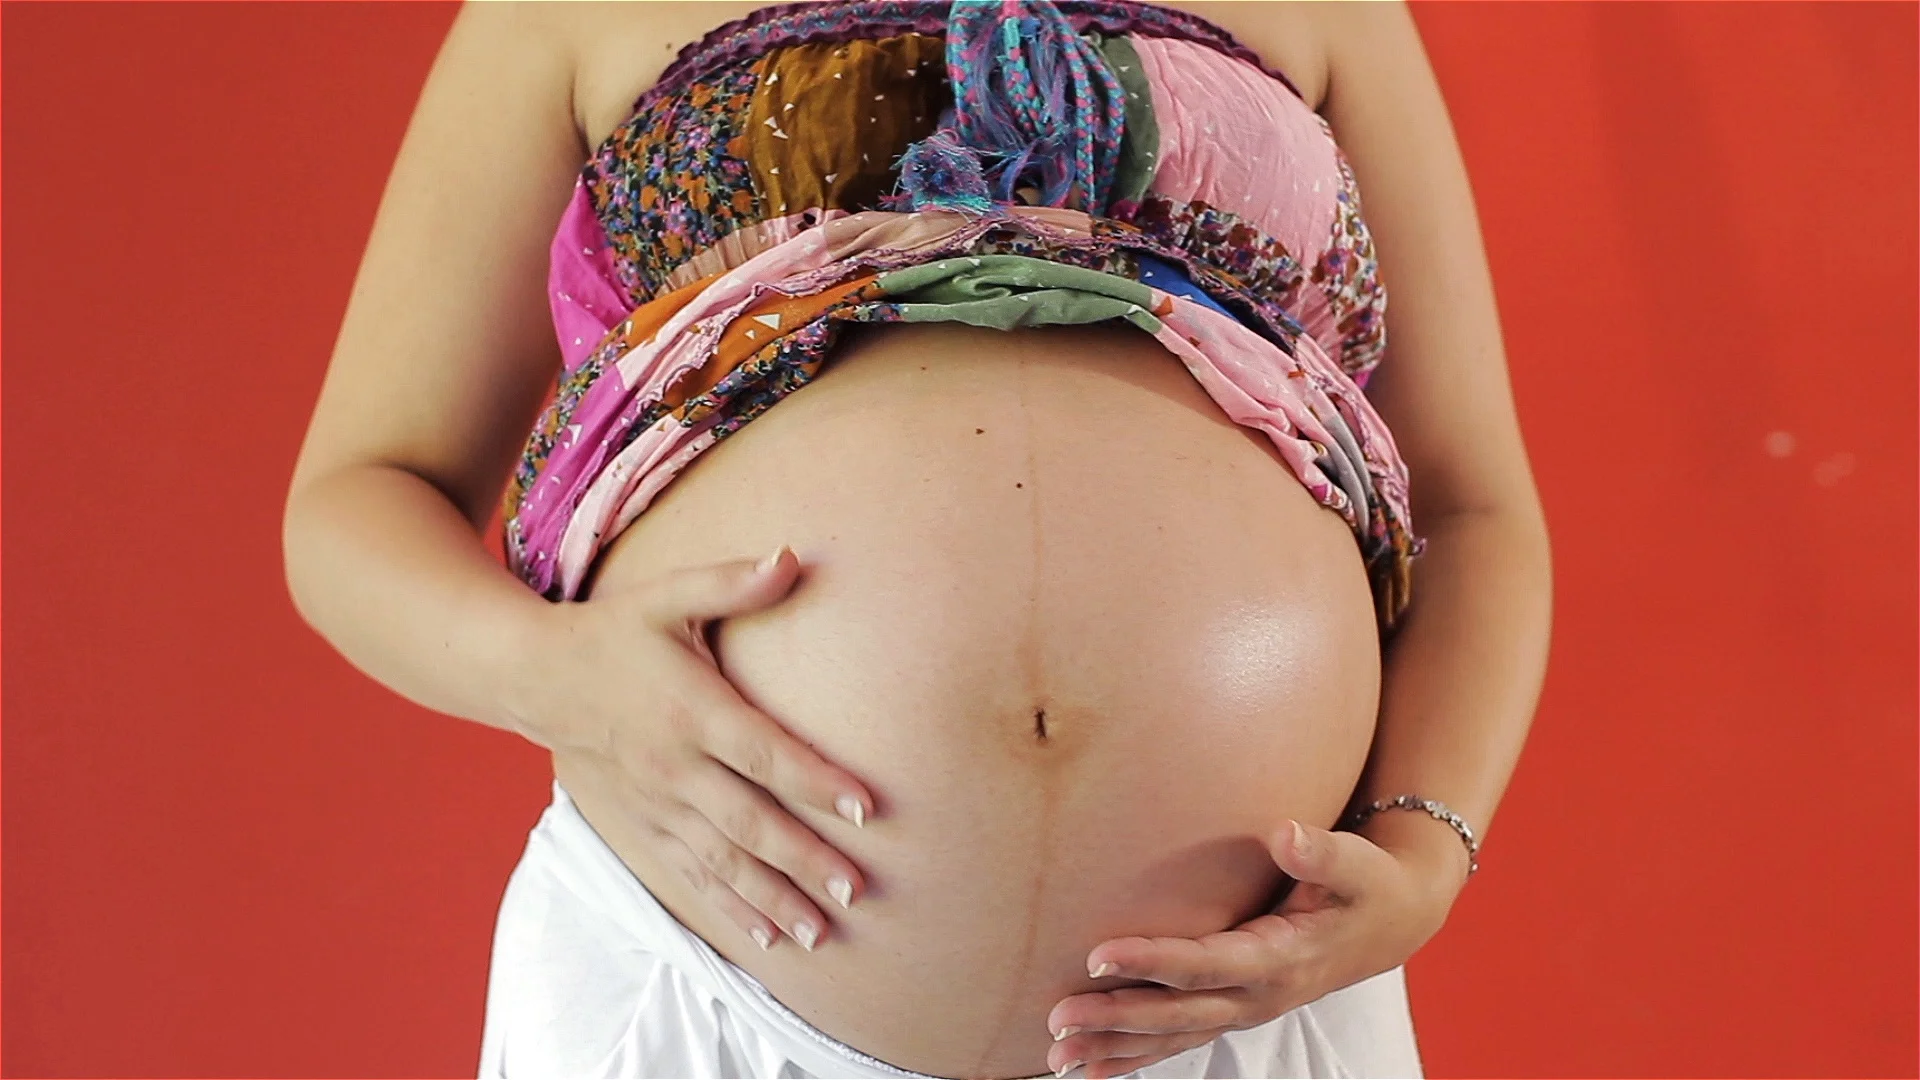 Pregnancy Belly Lift 